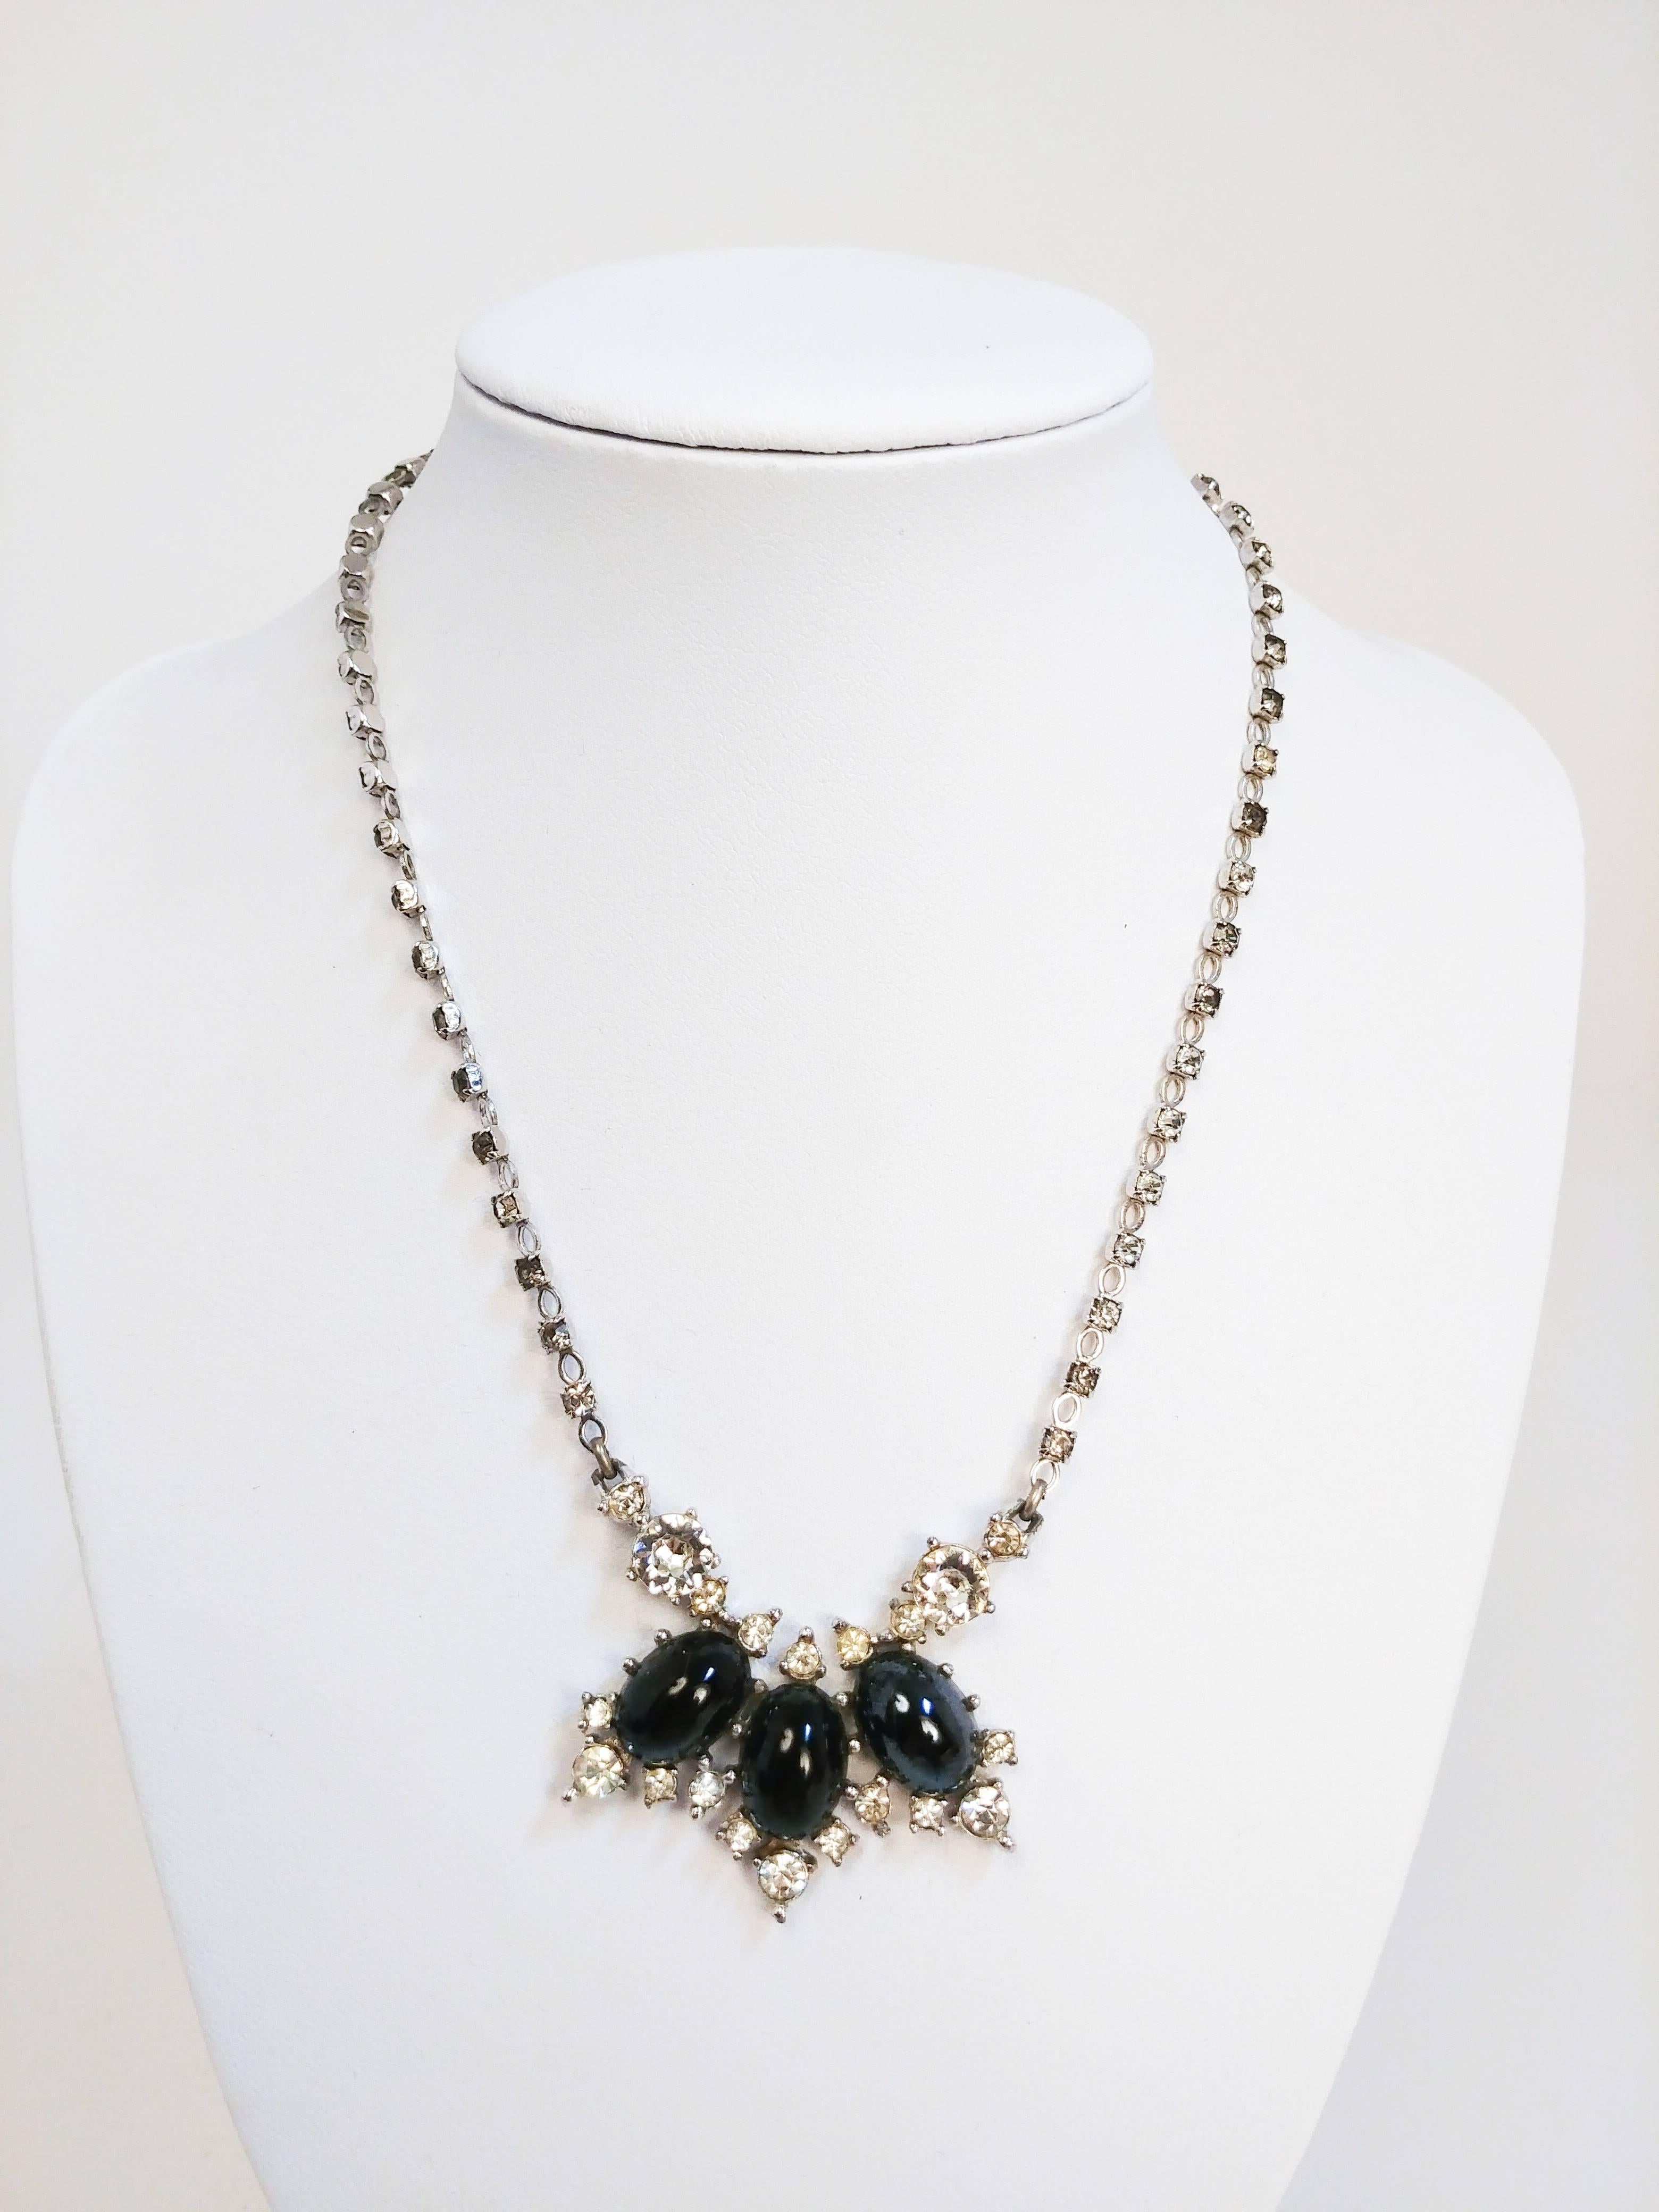 1960s Bogoff Black stone & clear rhinestone Necklace. Signed Bogoff silver tone necklace with clear rhinestones and black glass cobochon. Adjustable hook closure